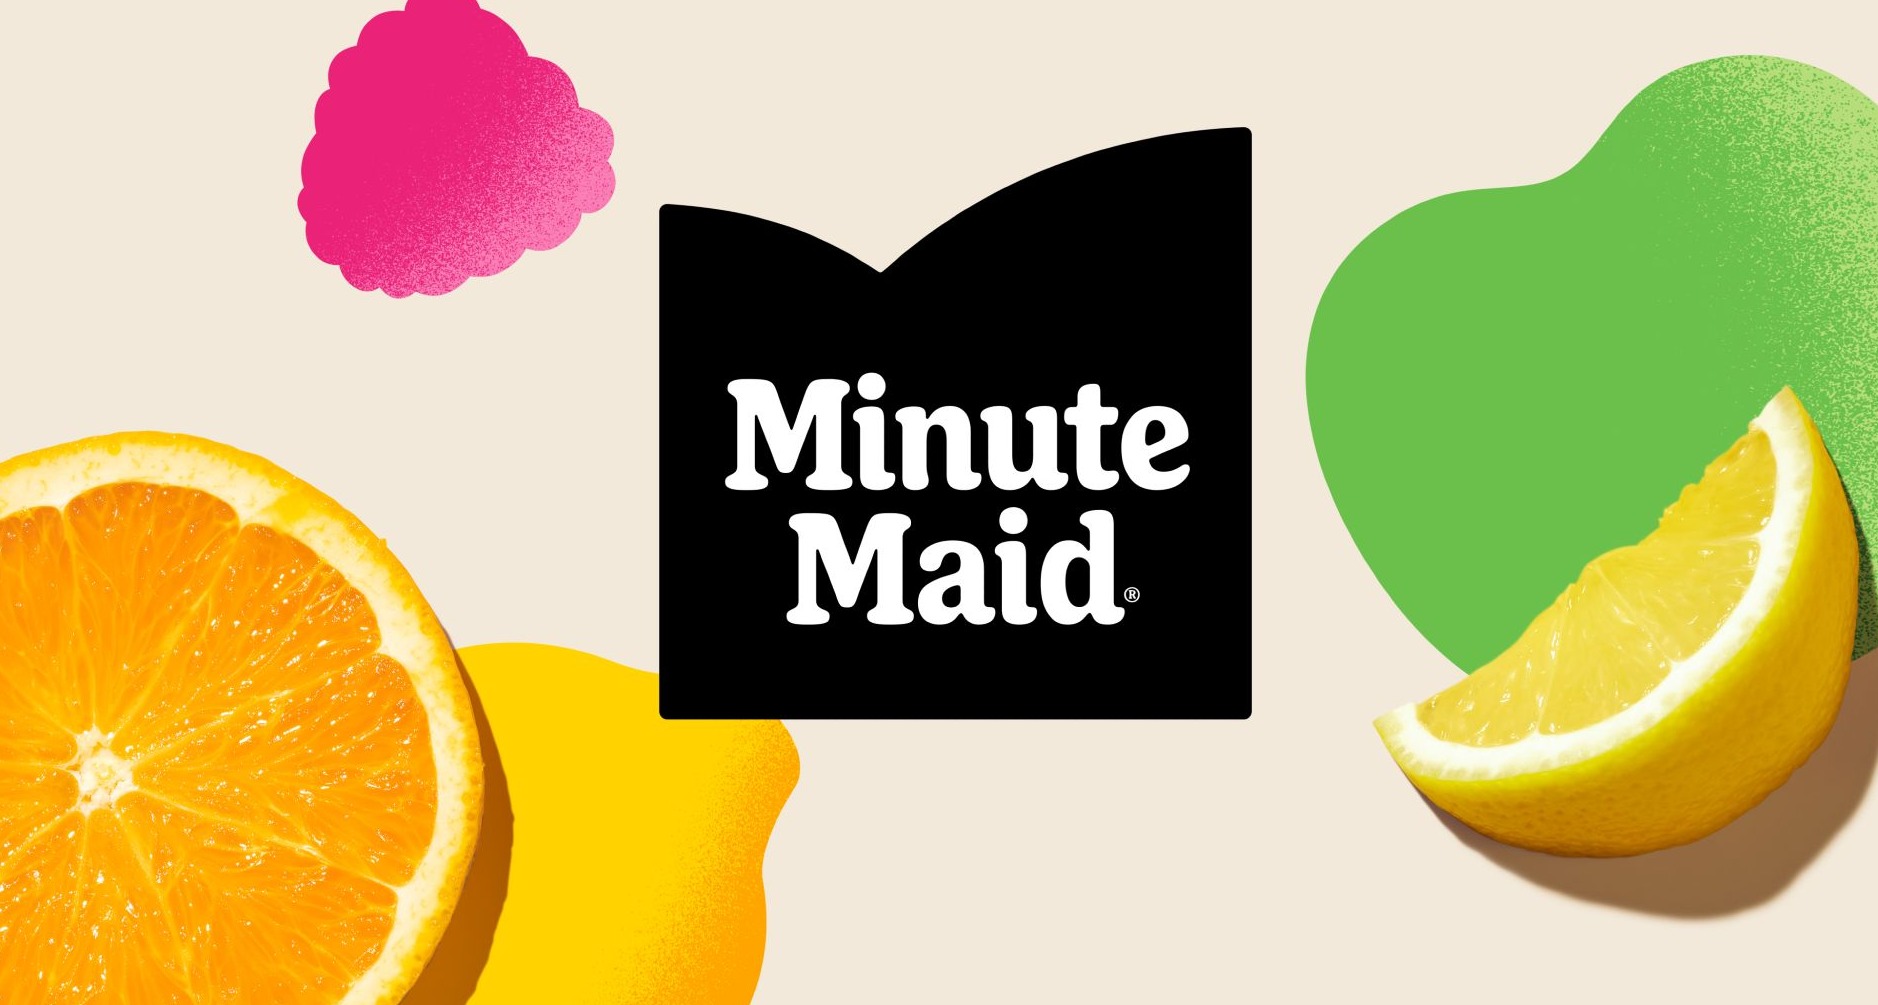 Minute Maid- Nueva imagen